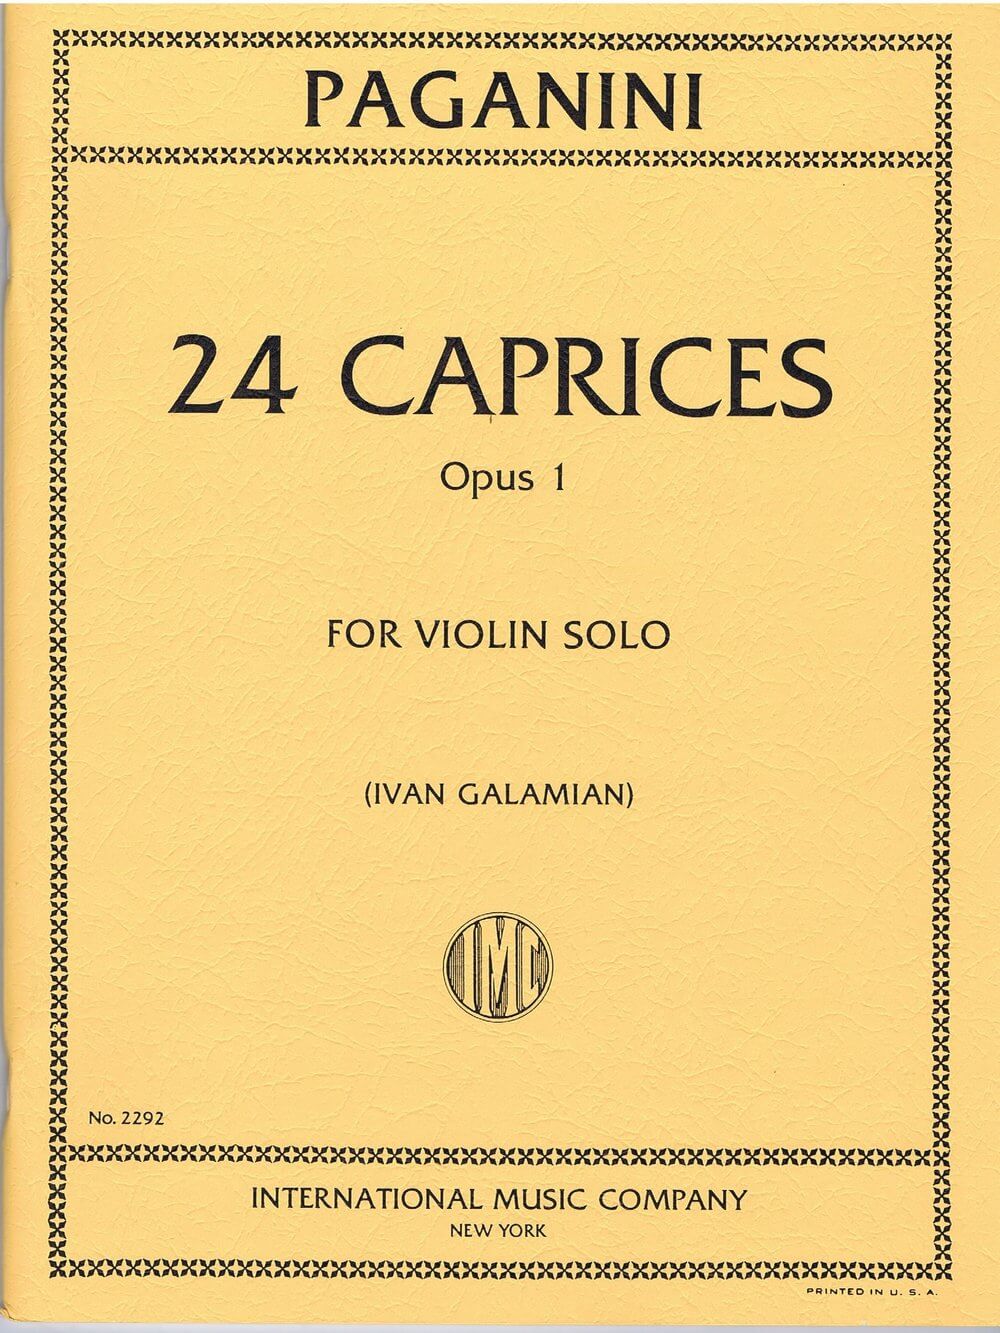 24 Caprices op. 1 violin. Paganini